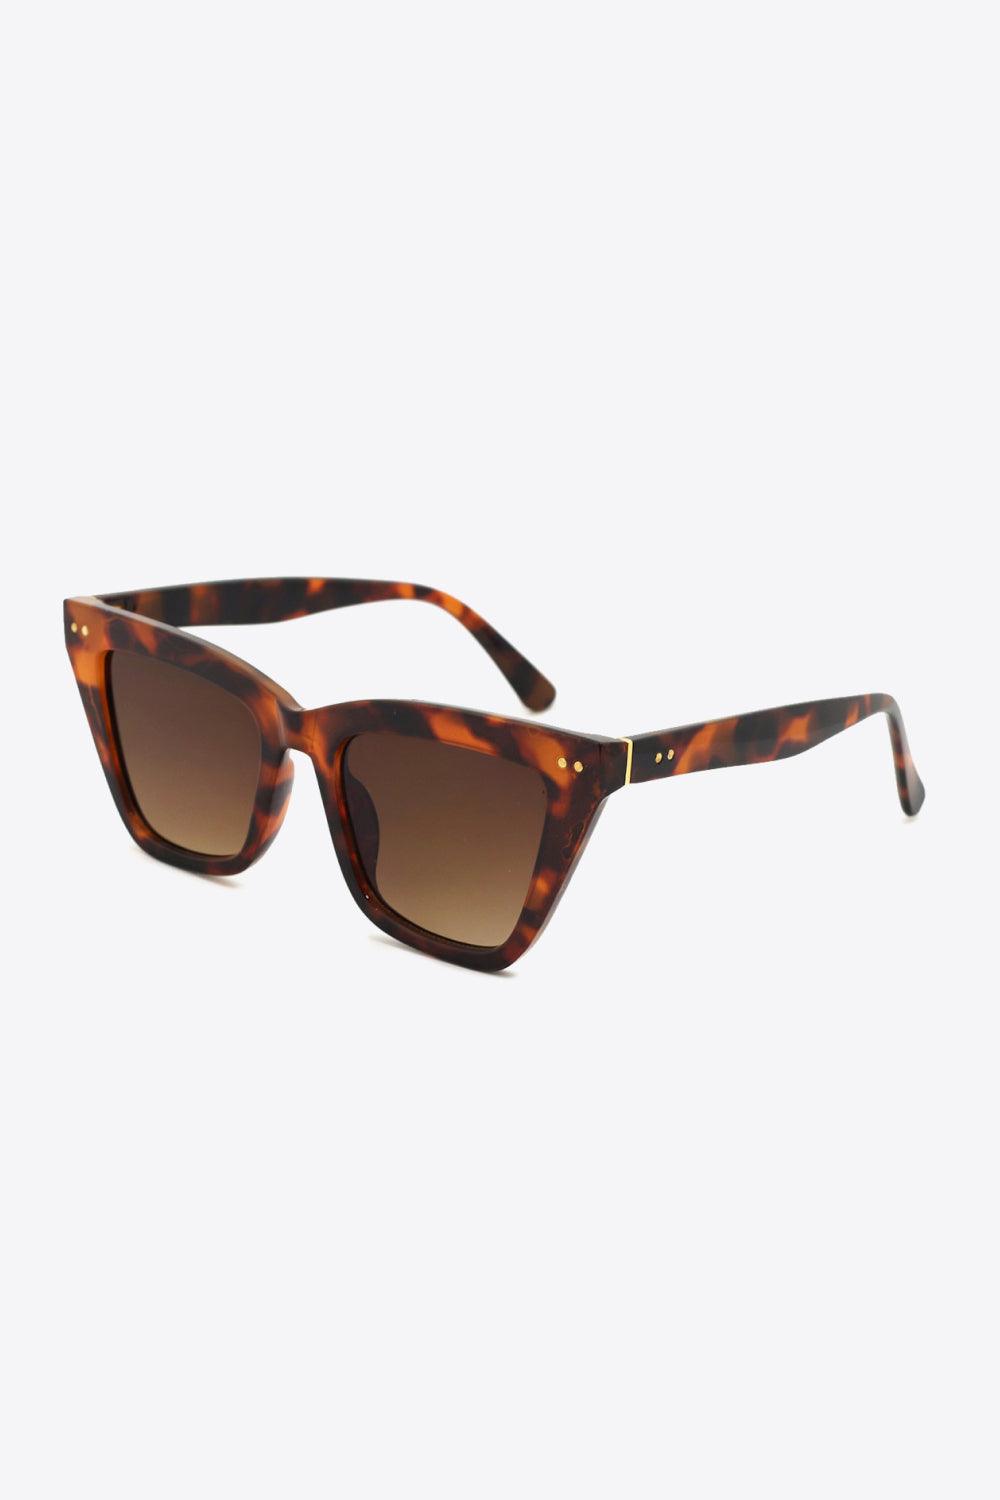 UV400 Polycarbonate Frame Sunglasses - Olive Ave